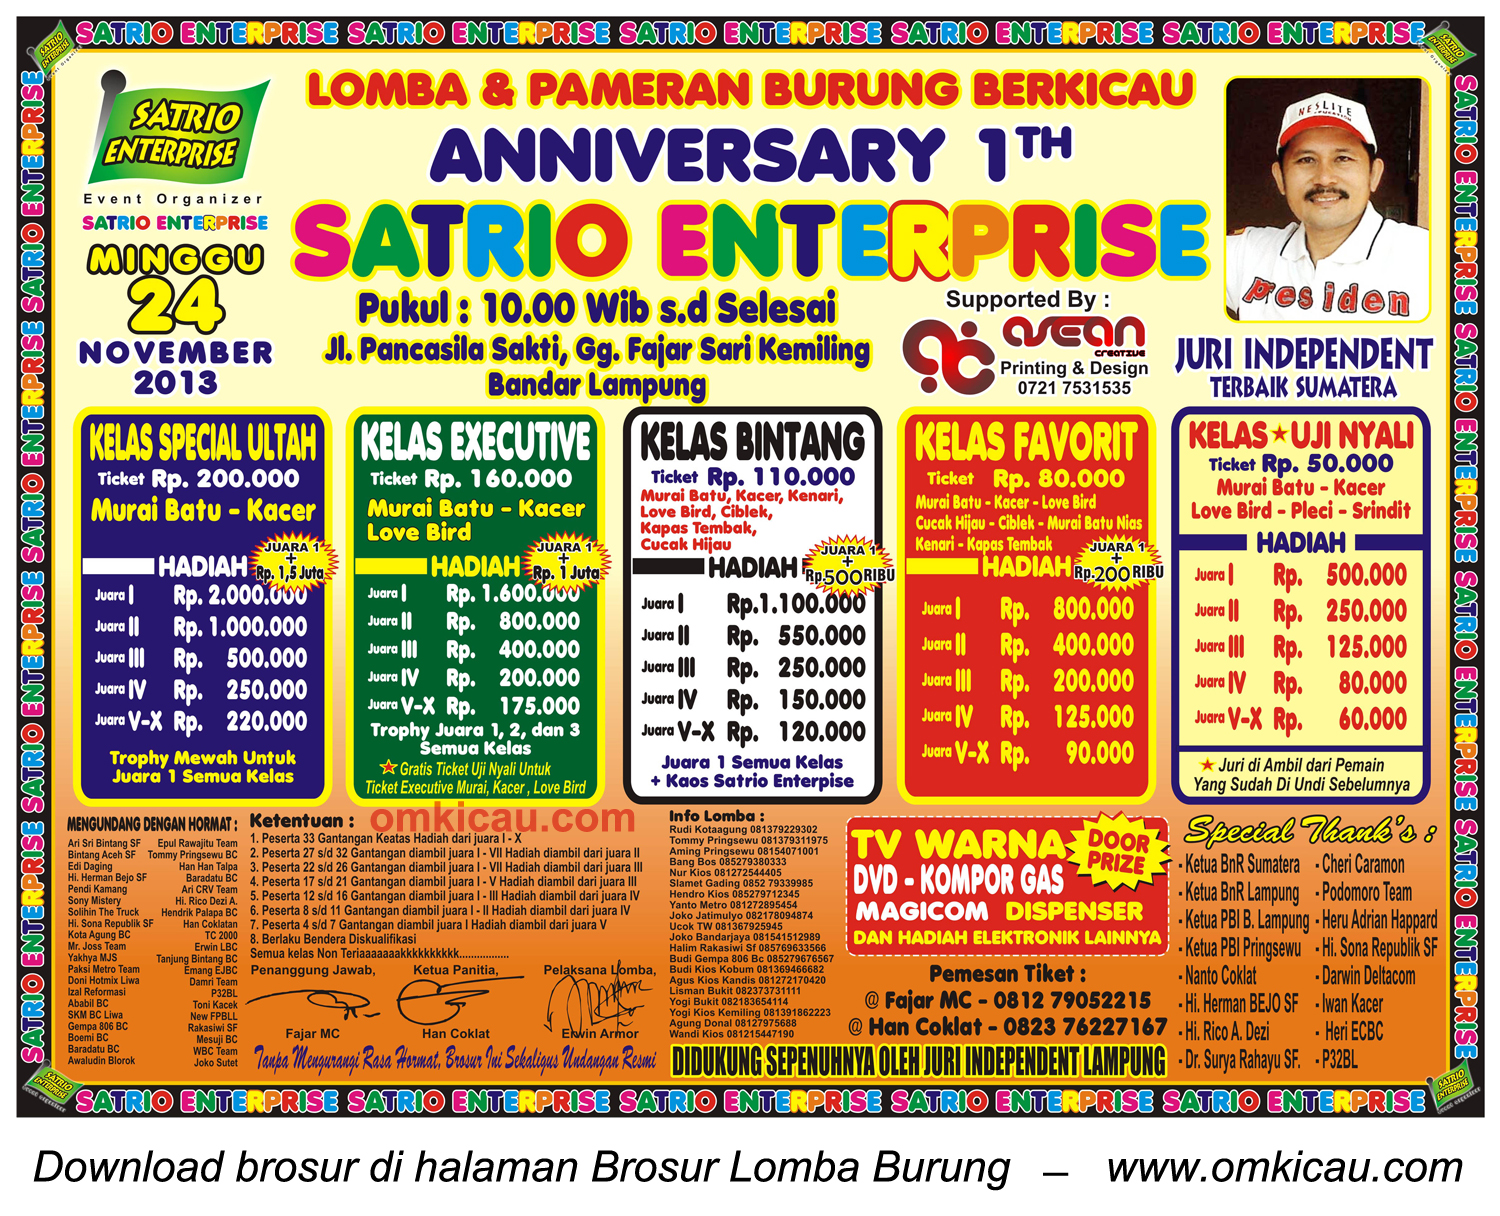 Brosur Lomba Burung Berkicau 1st Anniversary Satrio Enterprise, Bandar Lampung, 24 November 2013